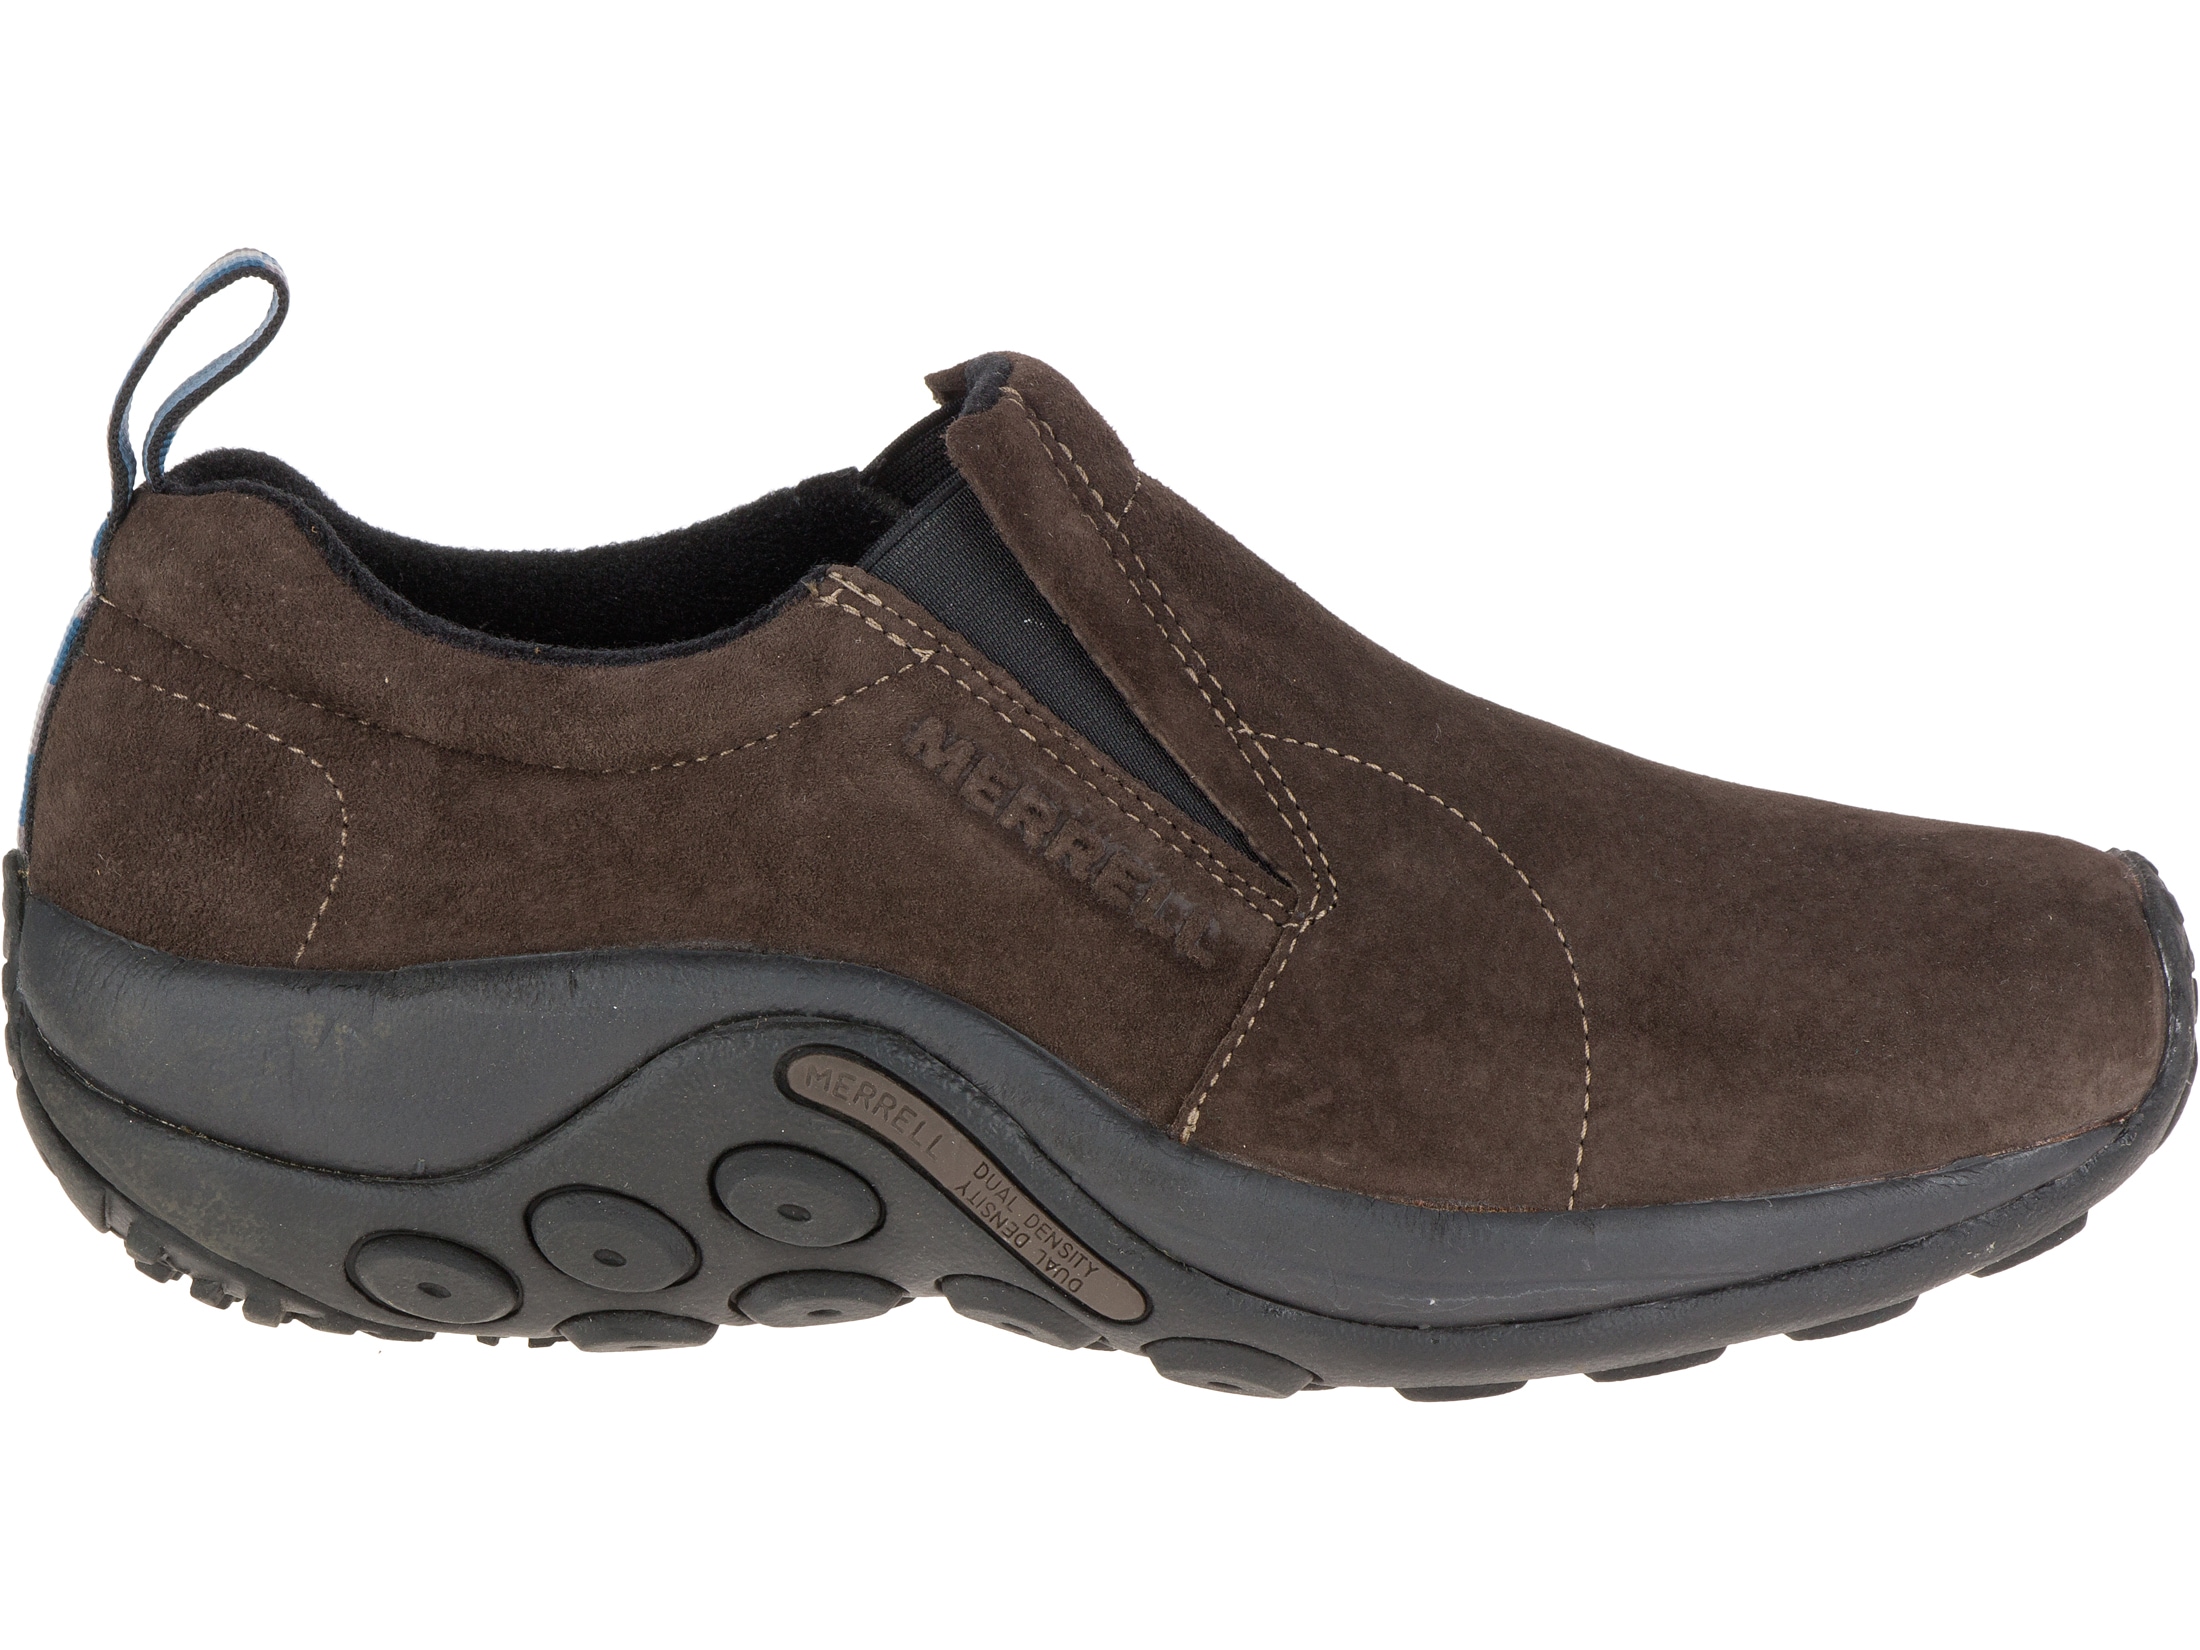 Merrell Jungle Moc Hiking Shoes Leather Dark Earth Men's 10 D